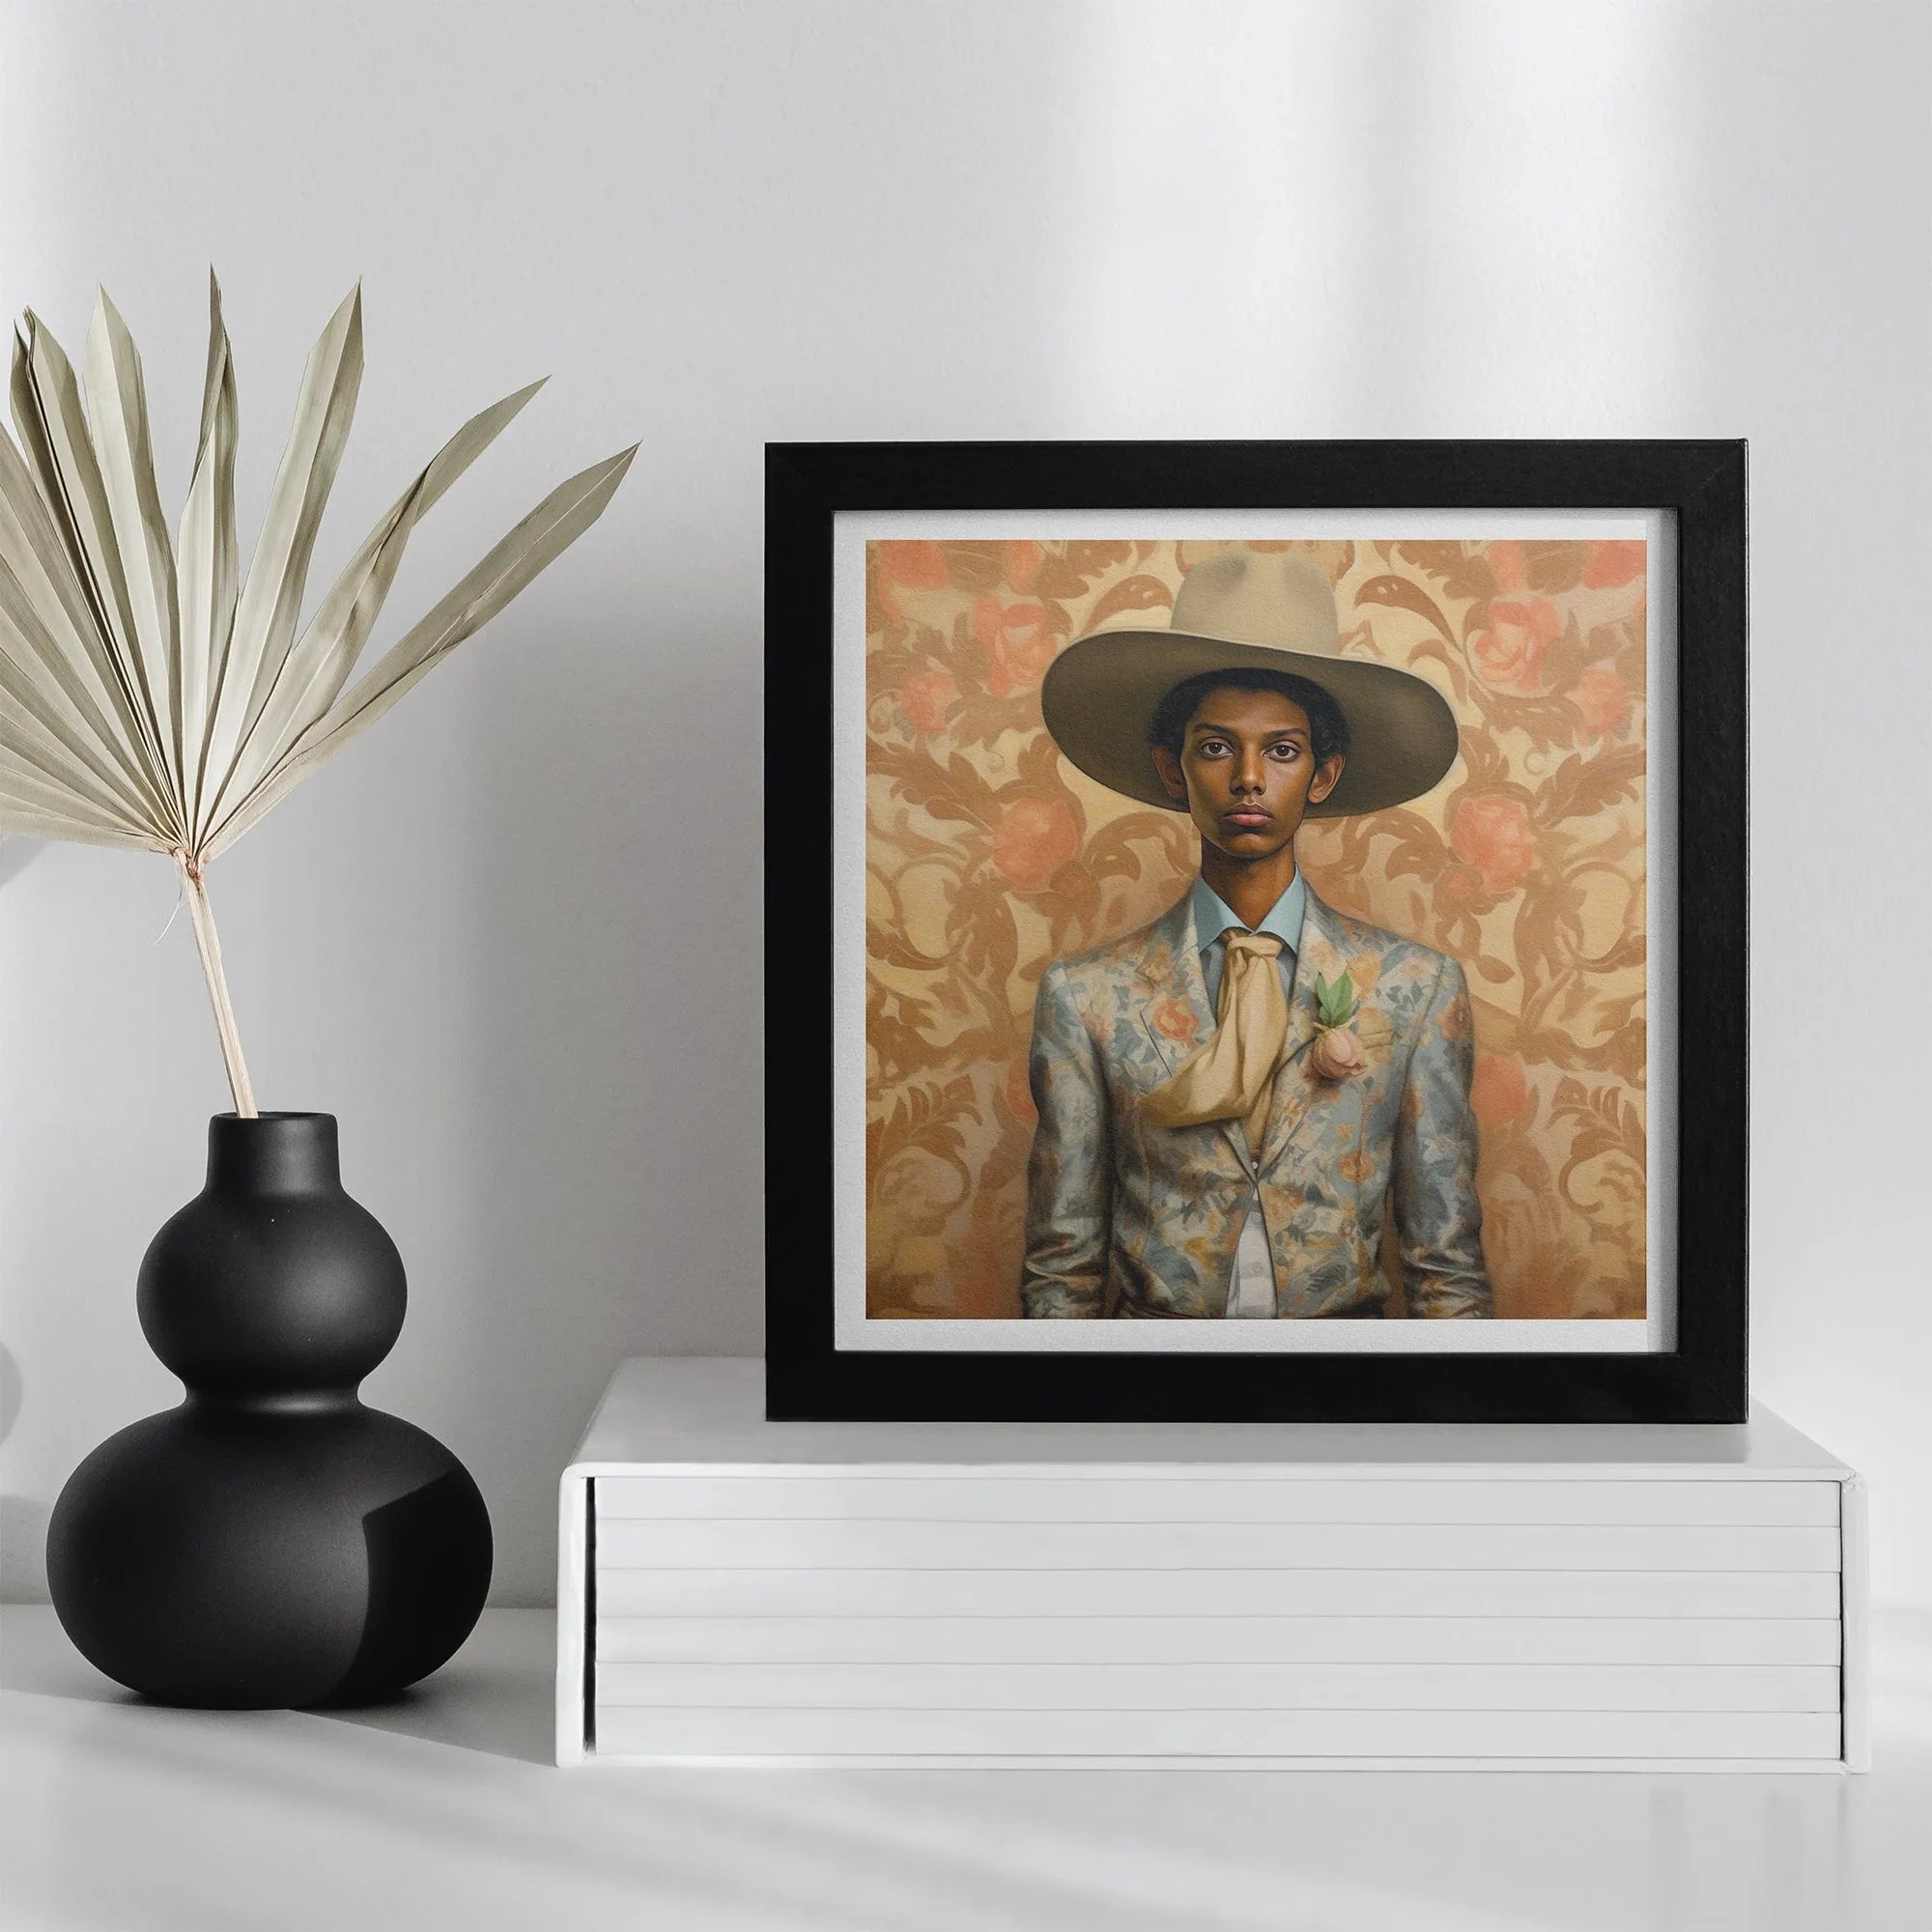 Mallaravan The Transgender Cowboy - F2m Dandy Transman Art - 16’x16’ - Posters Prints & Visual Artwork - Aesthetic Art